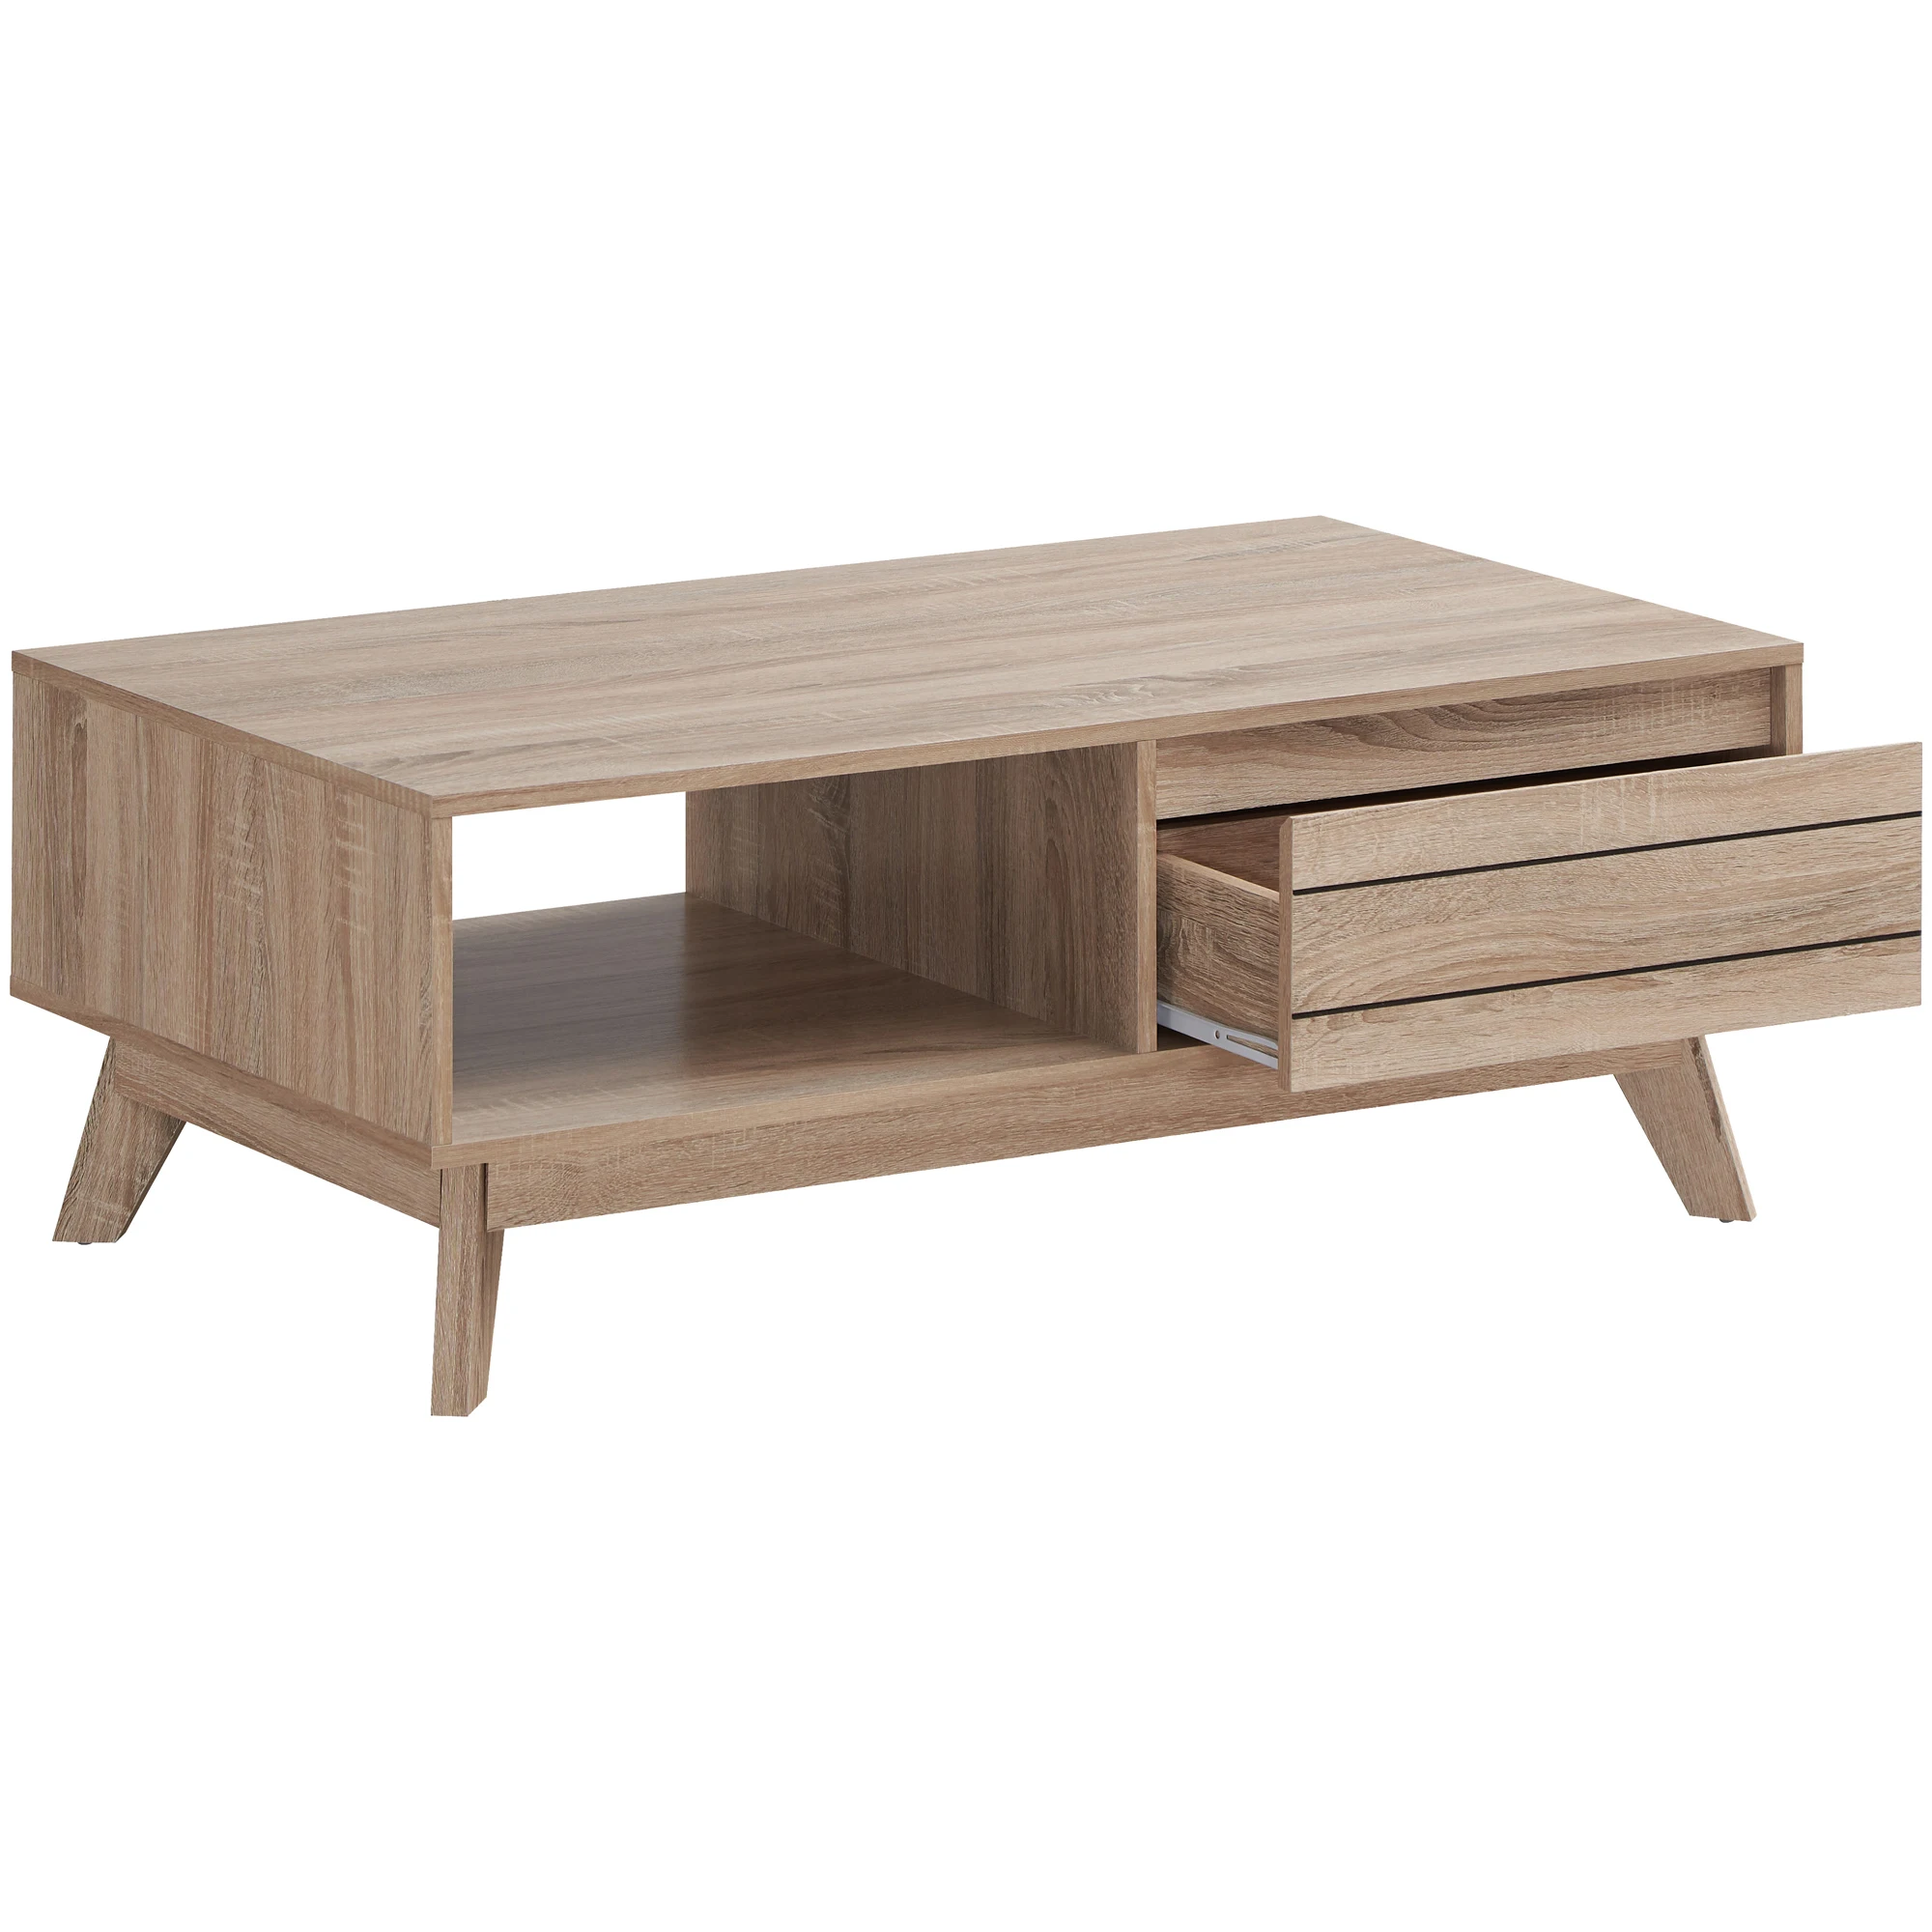 

European Online Best Seller 1 Drawer 1 Open Shelf PB Melamine Laminate Wood Coffee Table With Solid Pine Wood Leg